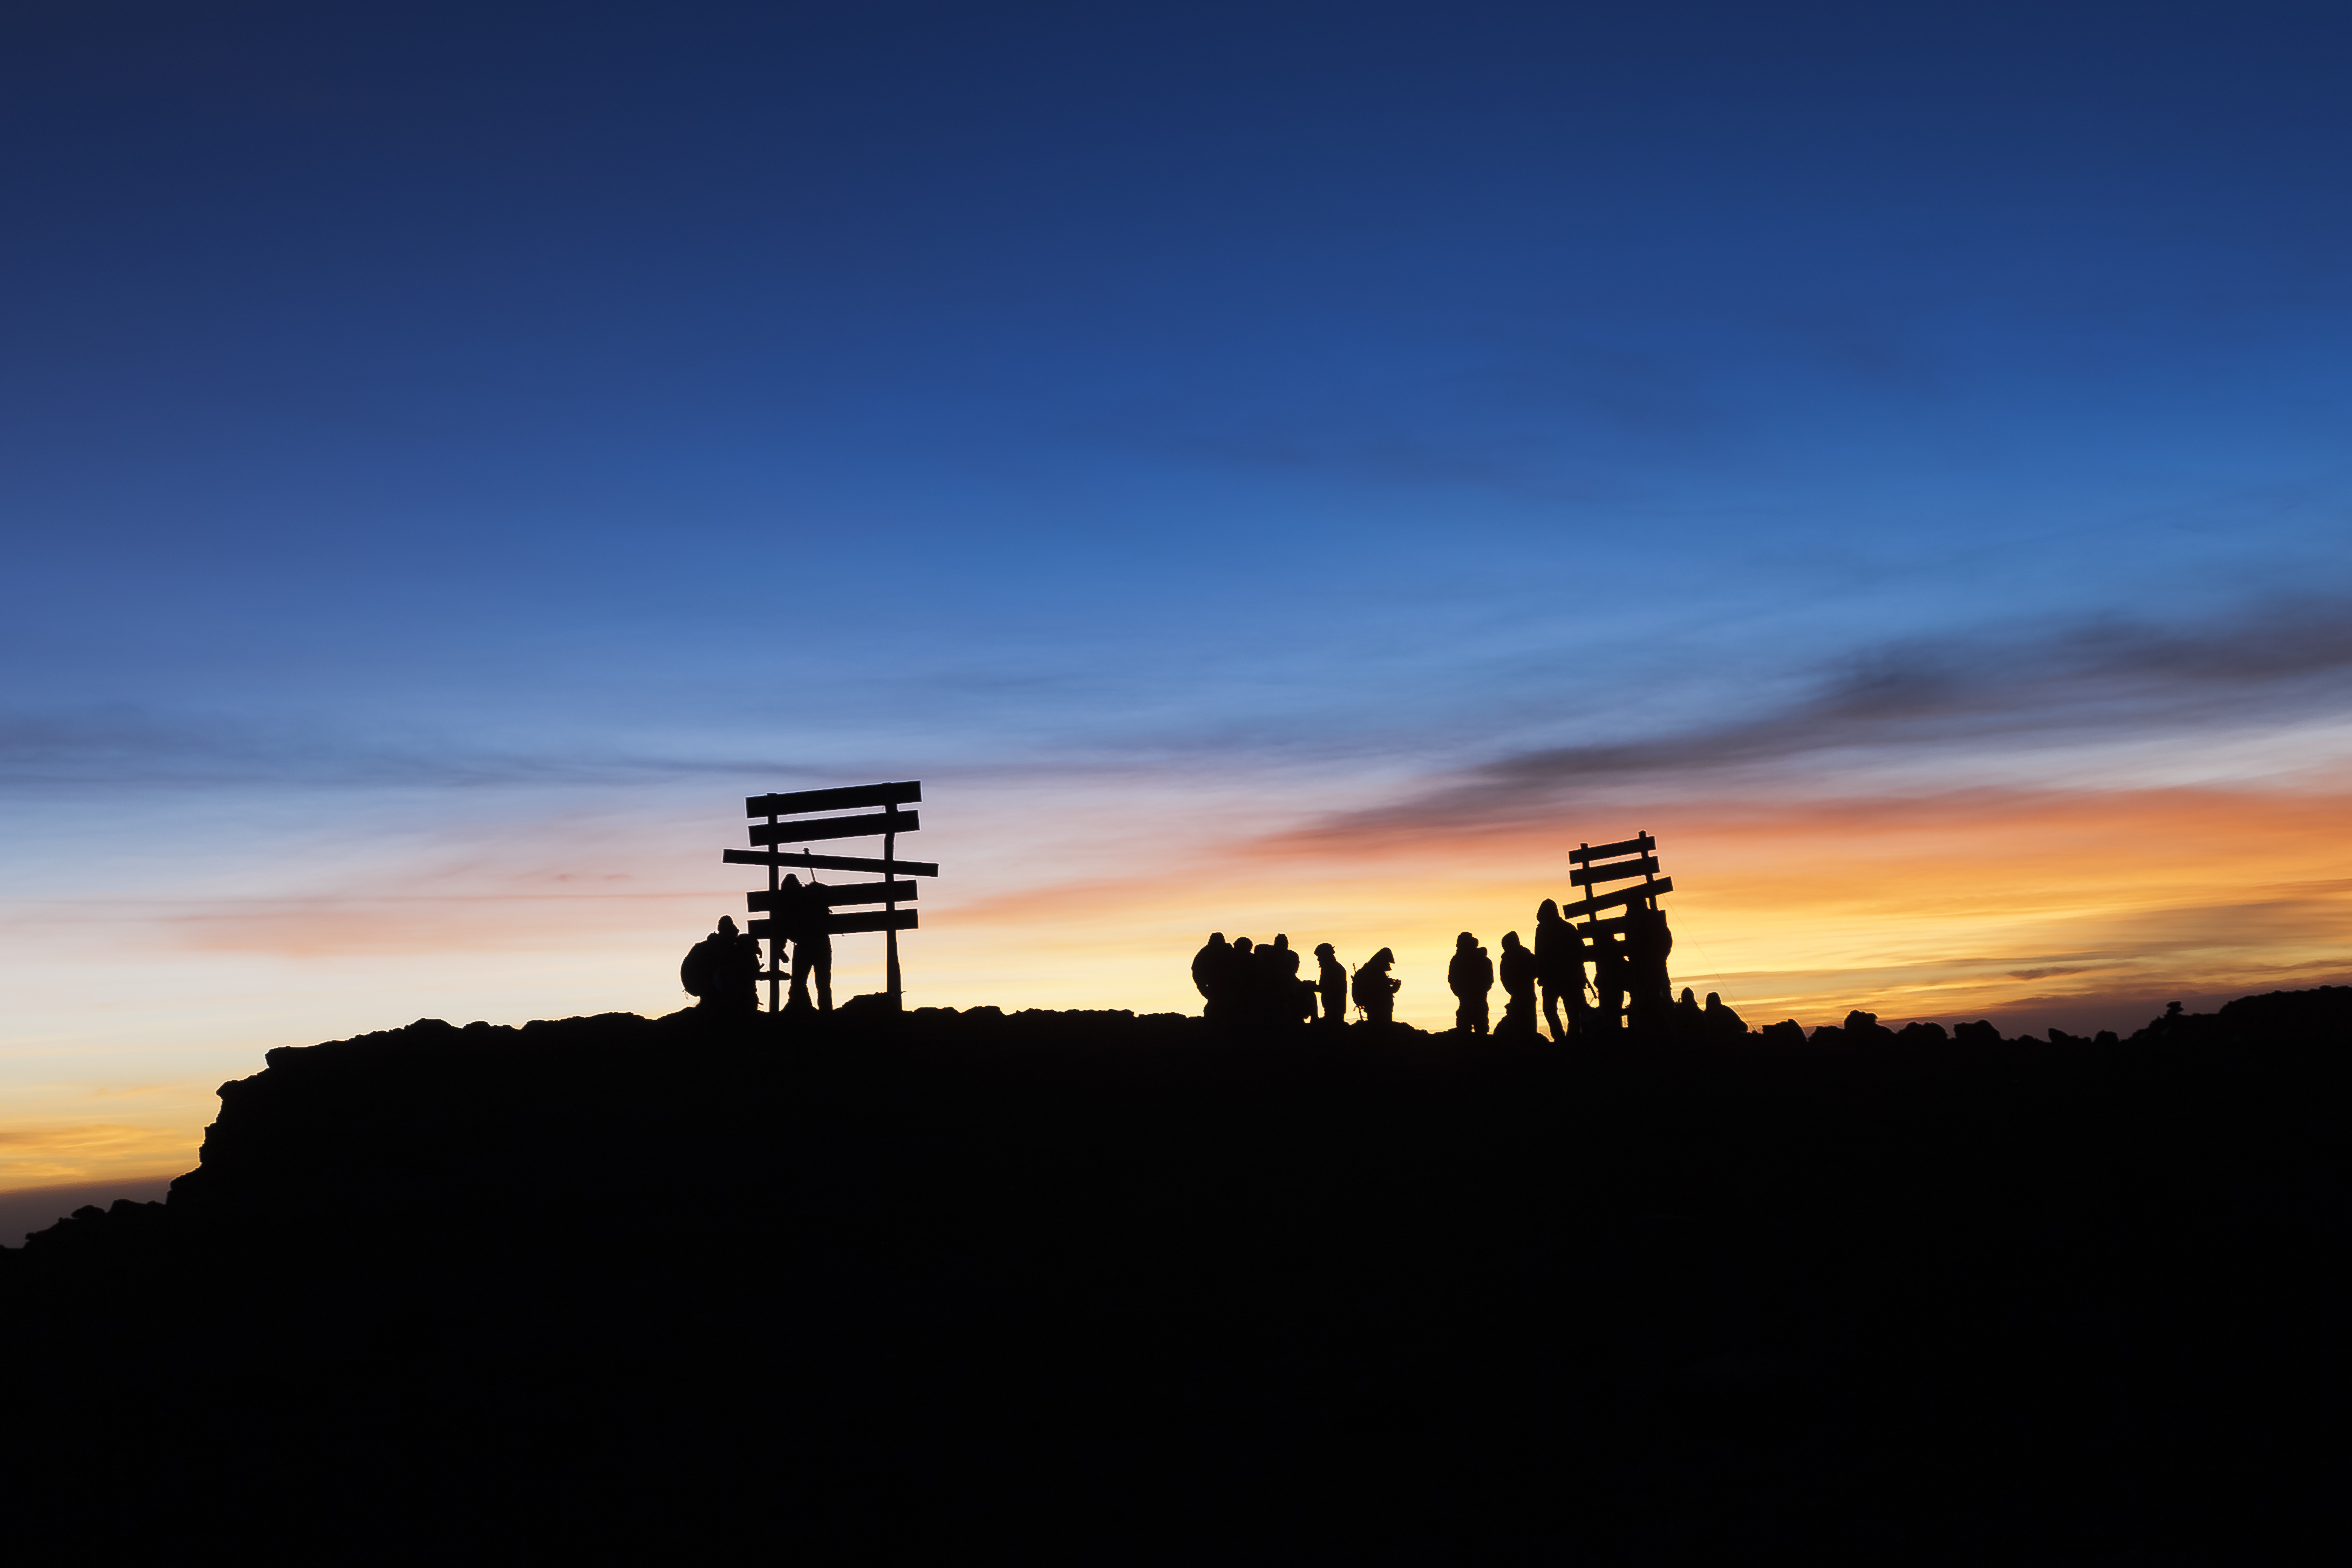 Sunrise at the summit of Mt. Kilimanjaro